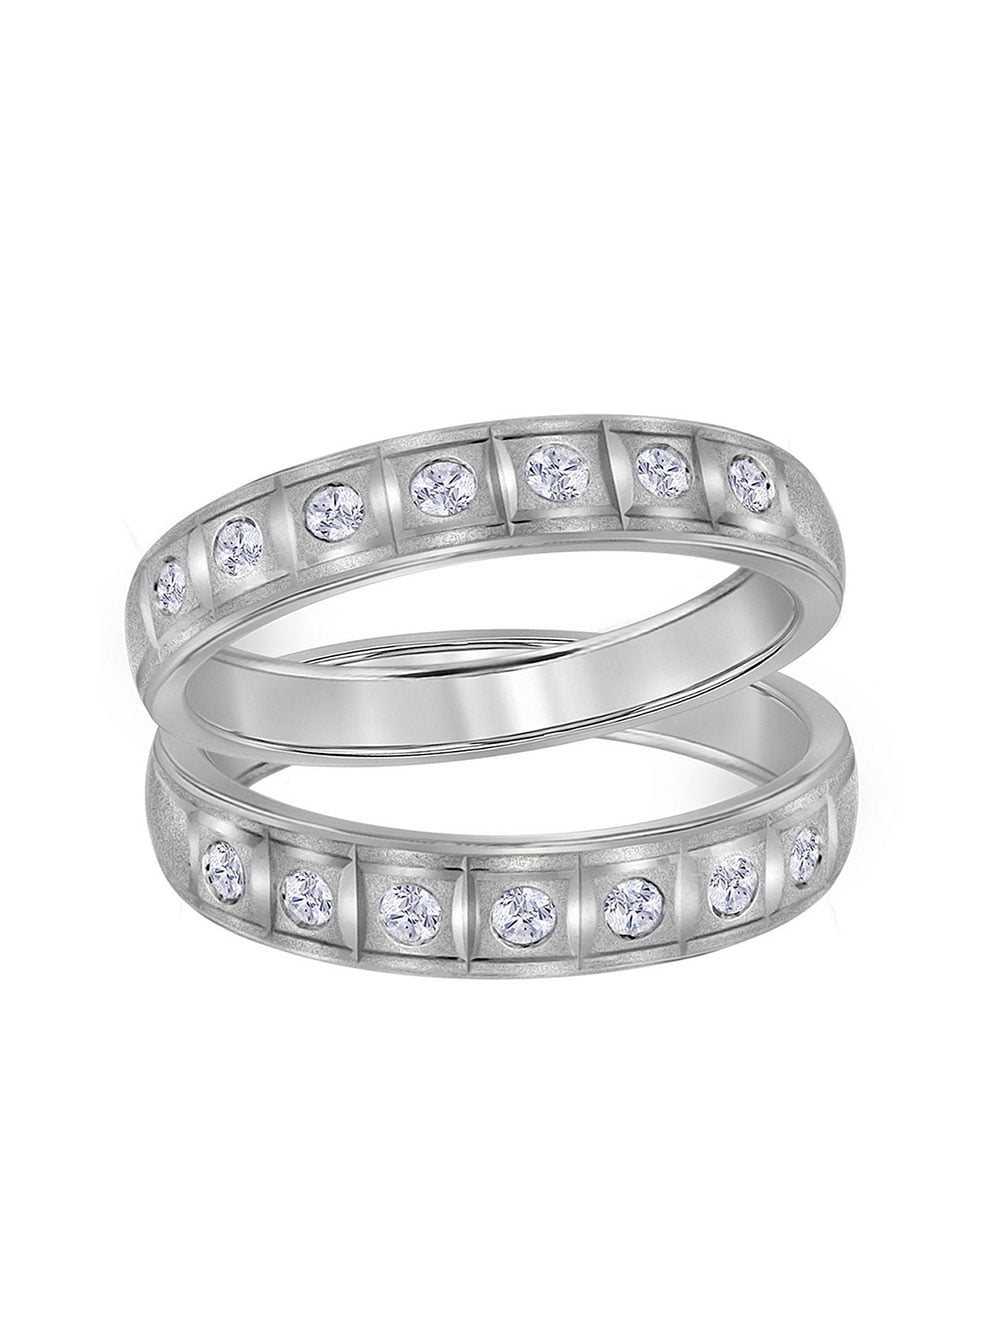 14K White Gold Channel Set Engagement Wedding Stud Earrings 2.27 Ct VVS1 Diamond